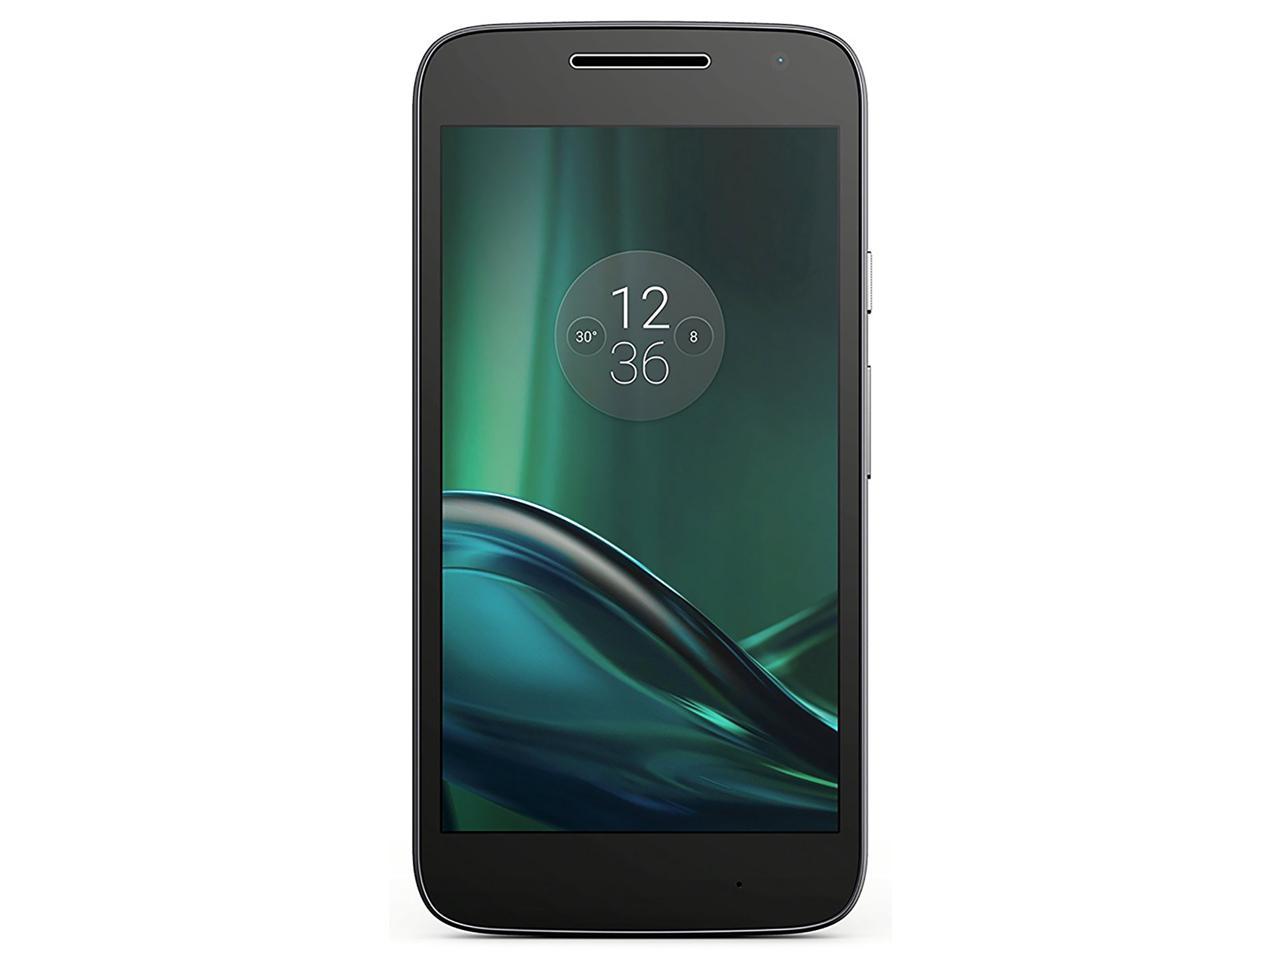 Ellendig Voorschrift Cordelia Refurbished: Motorola Moto G Play XT1601 16GB Unlocked GSM Dual-SIM 4G LTE  Quad-Core Android Phone / 8MP Camera - Black - Newegg.com